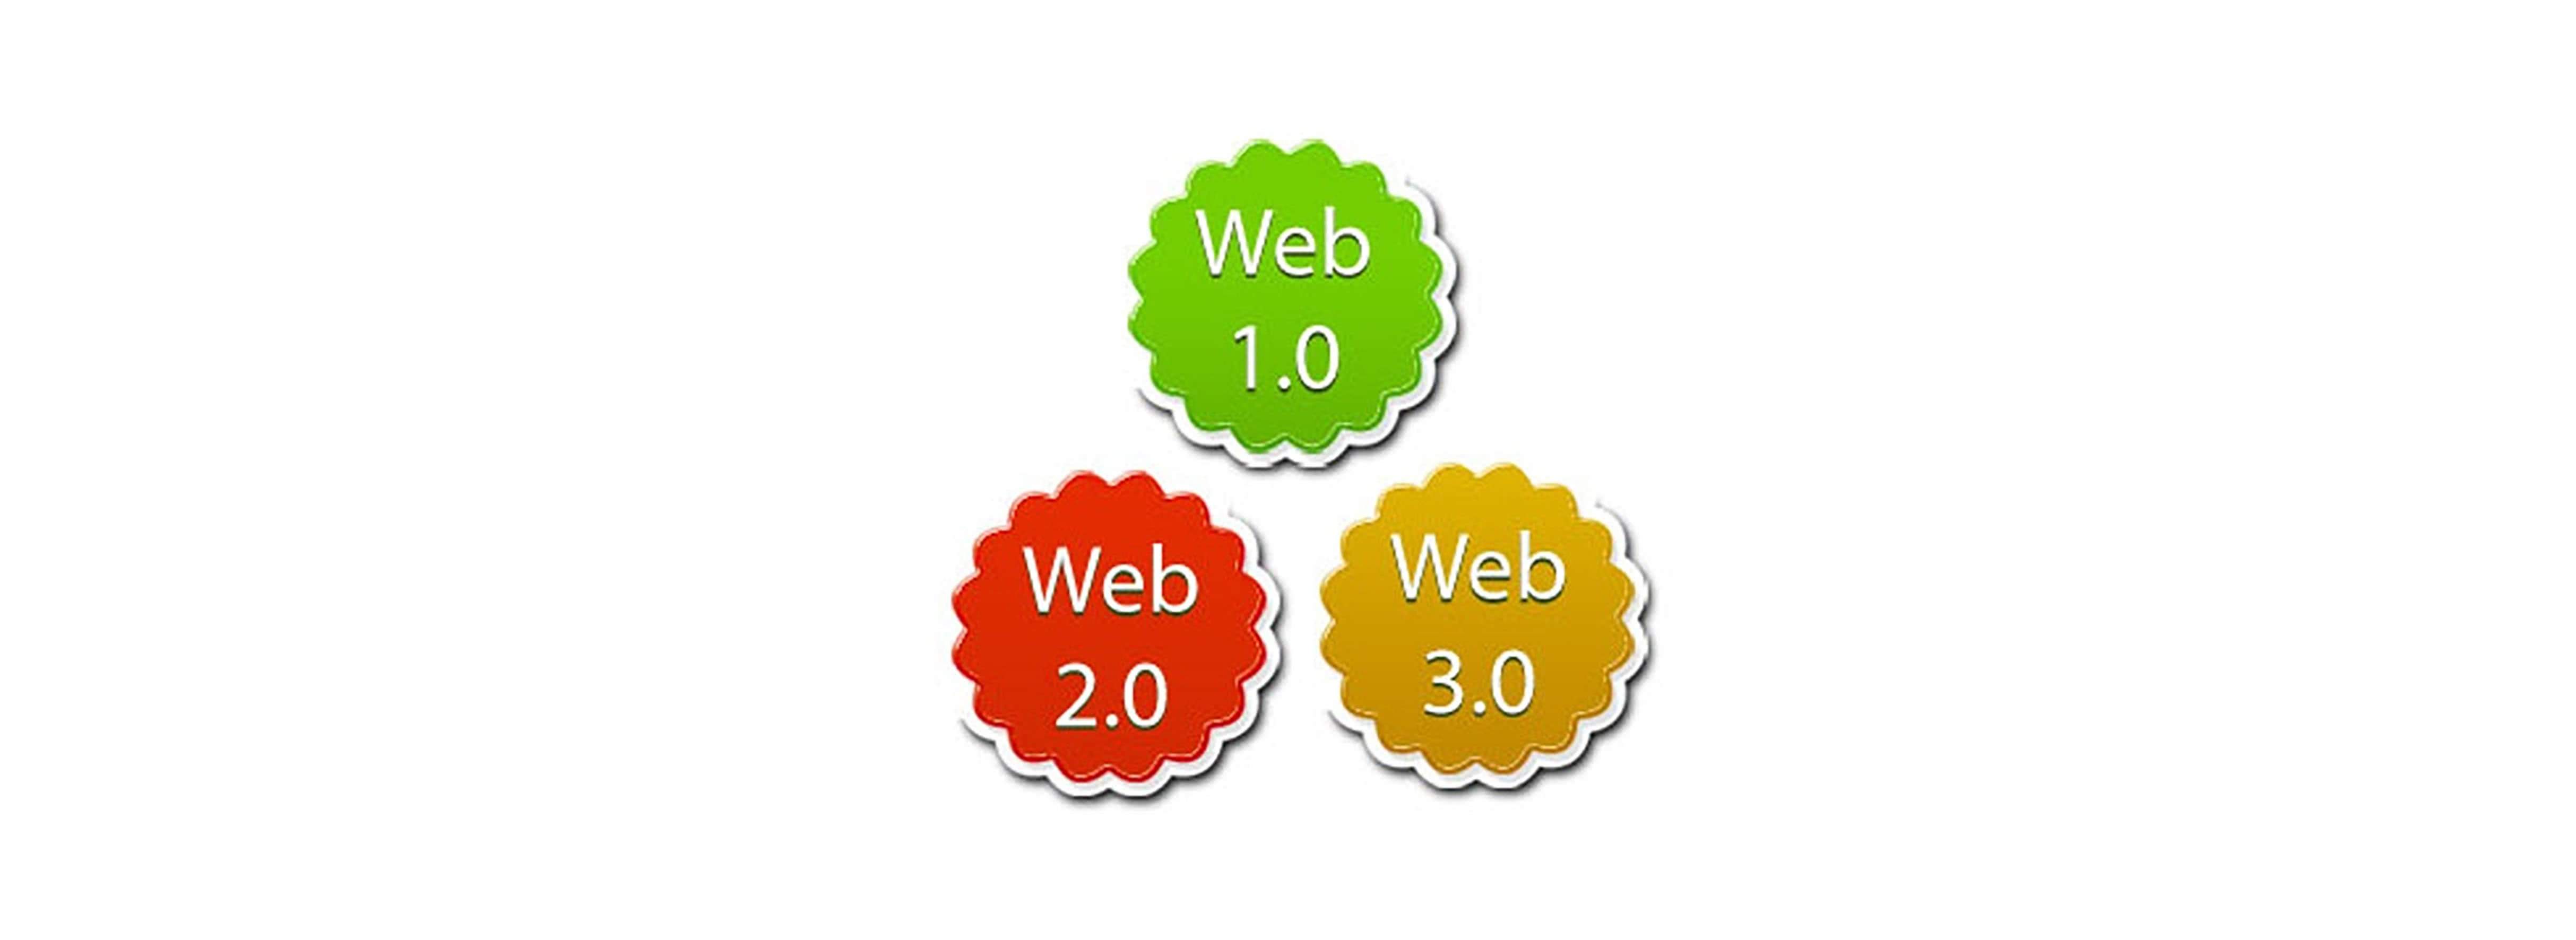 0 003. Технологии web 2.0. Технология web 3.0. Web 2 web 3. Web 1.0 web 2.0 web 3.0.